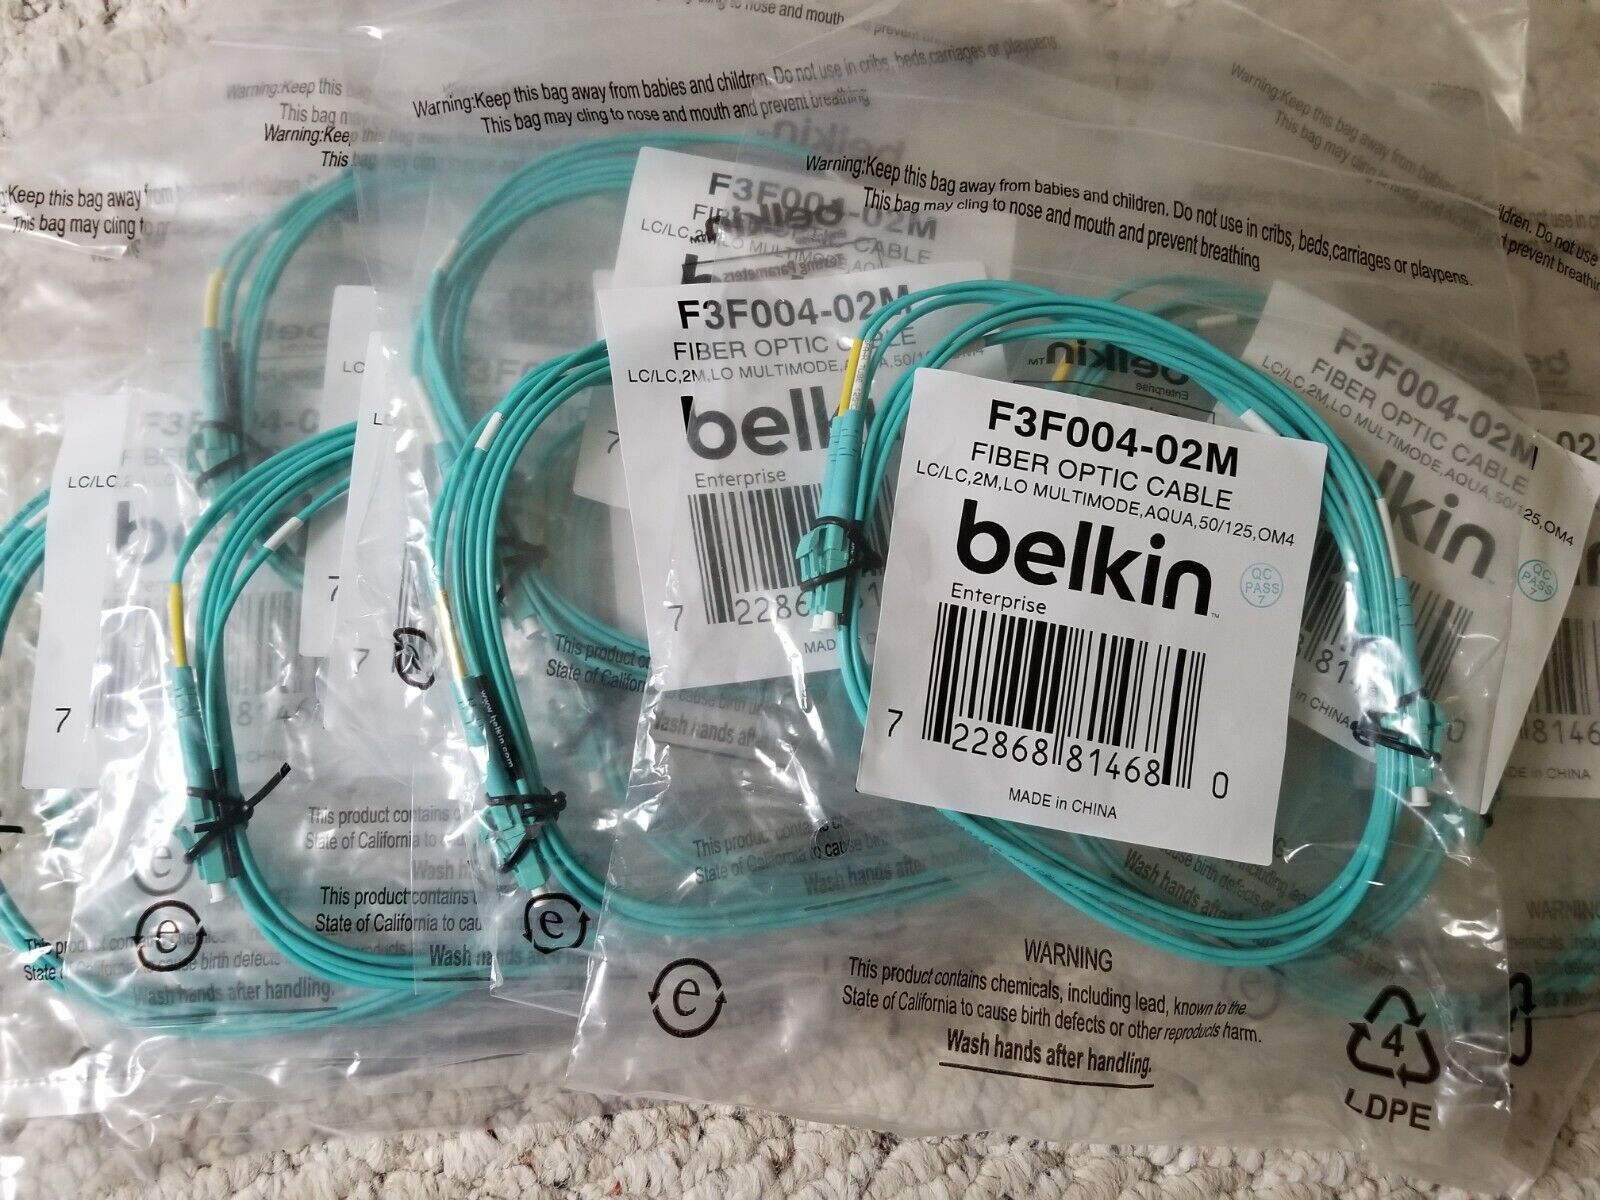 LOT of 3 Belkin Fiber Optic Network Cable F3F004-02M 